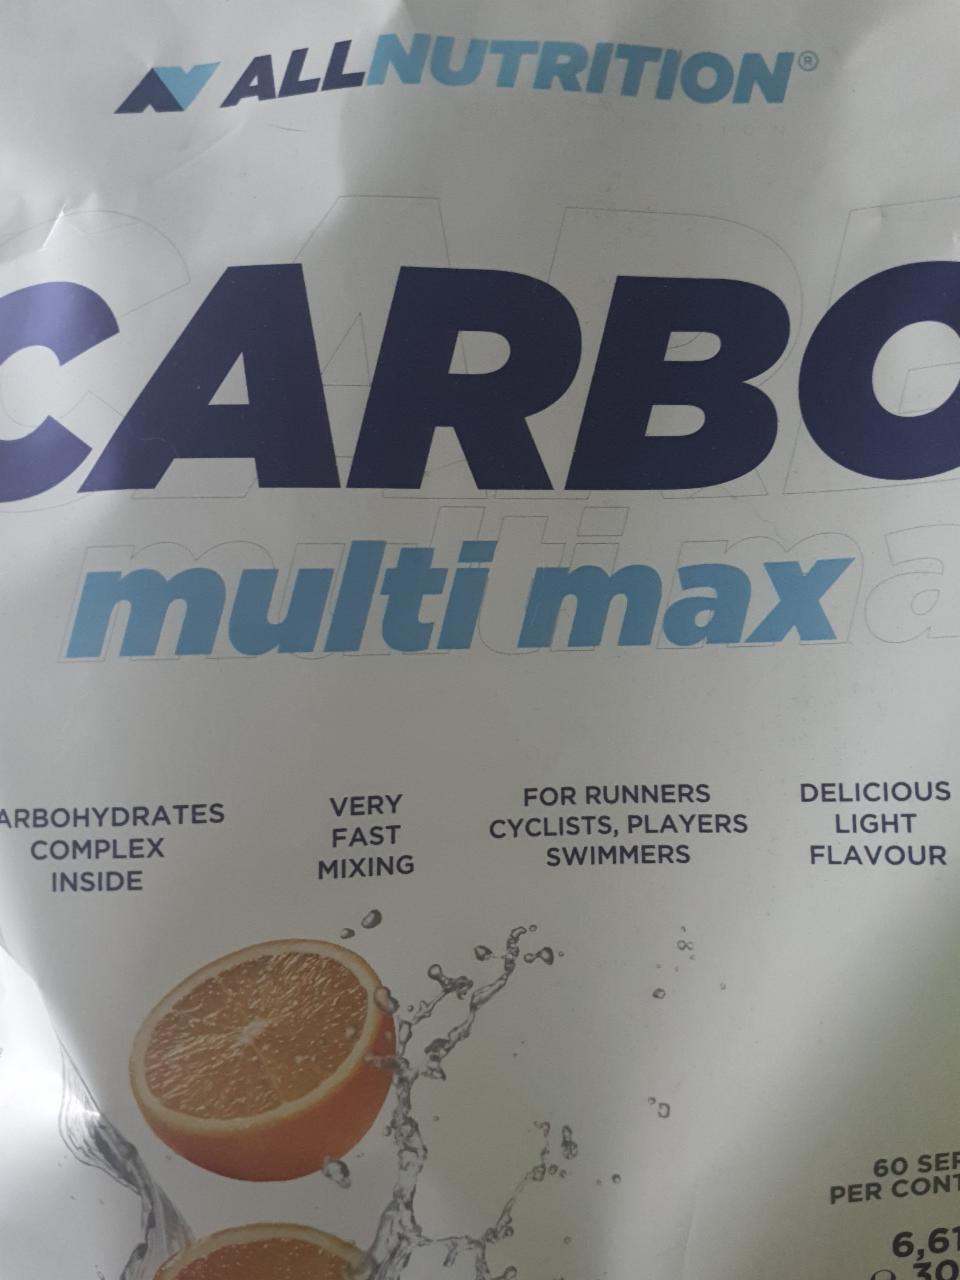 Zdjęcia - Carbo allnutrition multi max pomarańcza